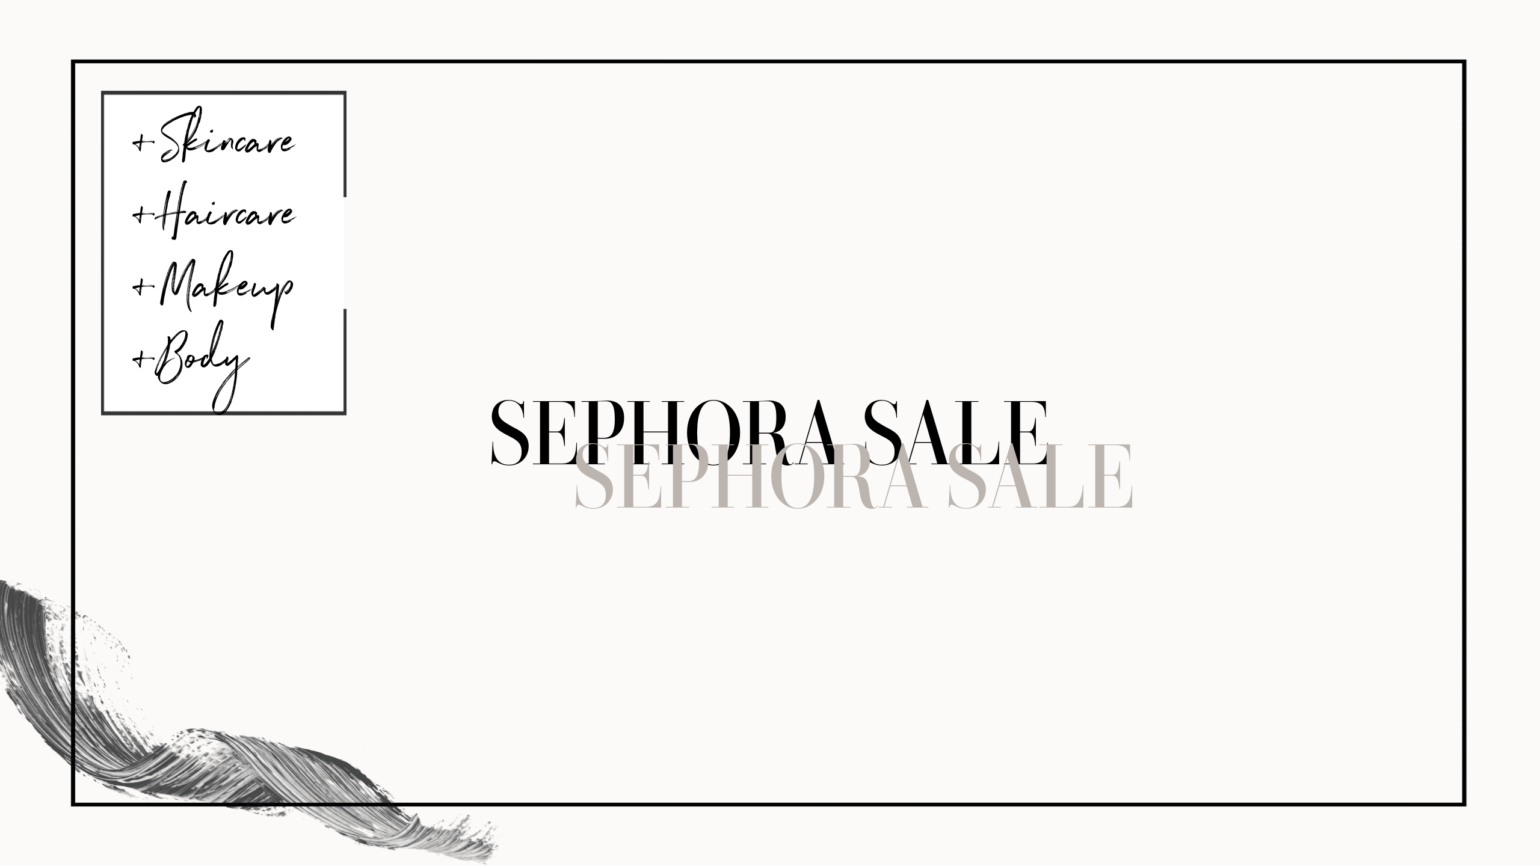 Your Guide to The 2021 Sephora Sale - Jessica Dlugosz